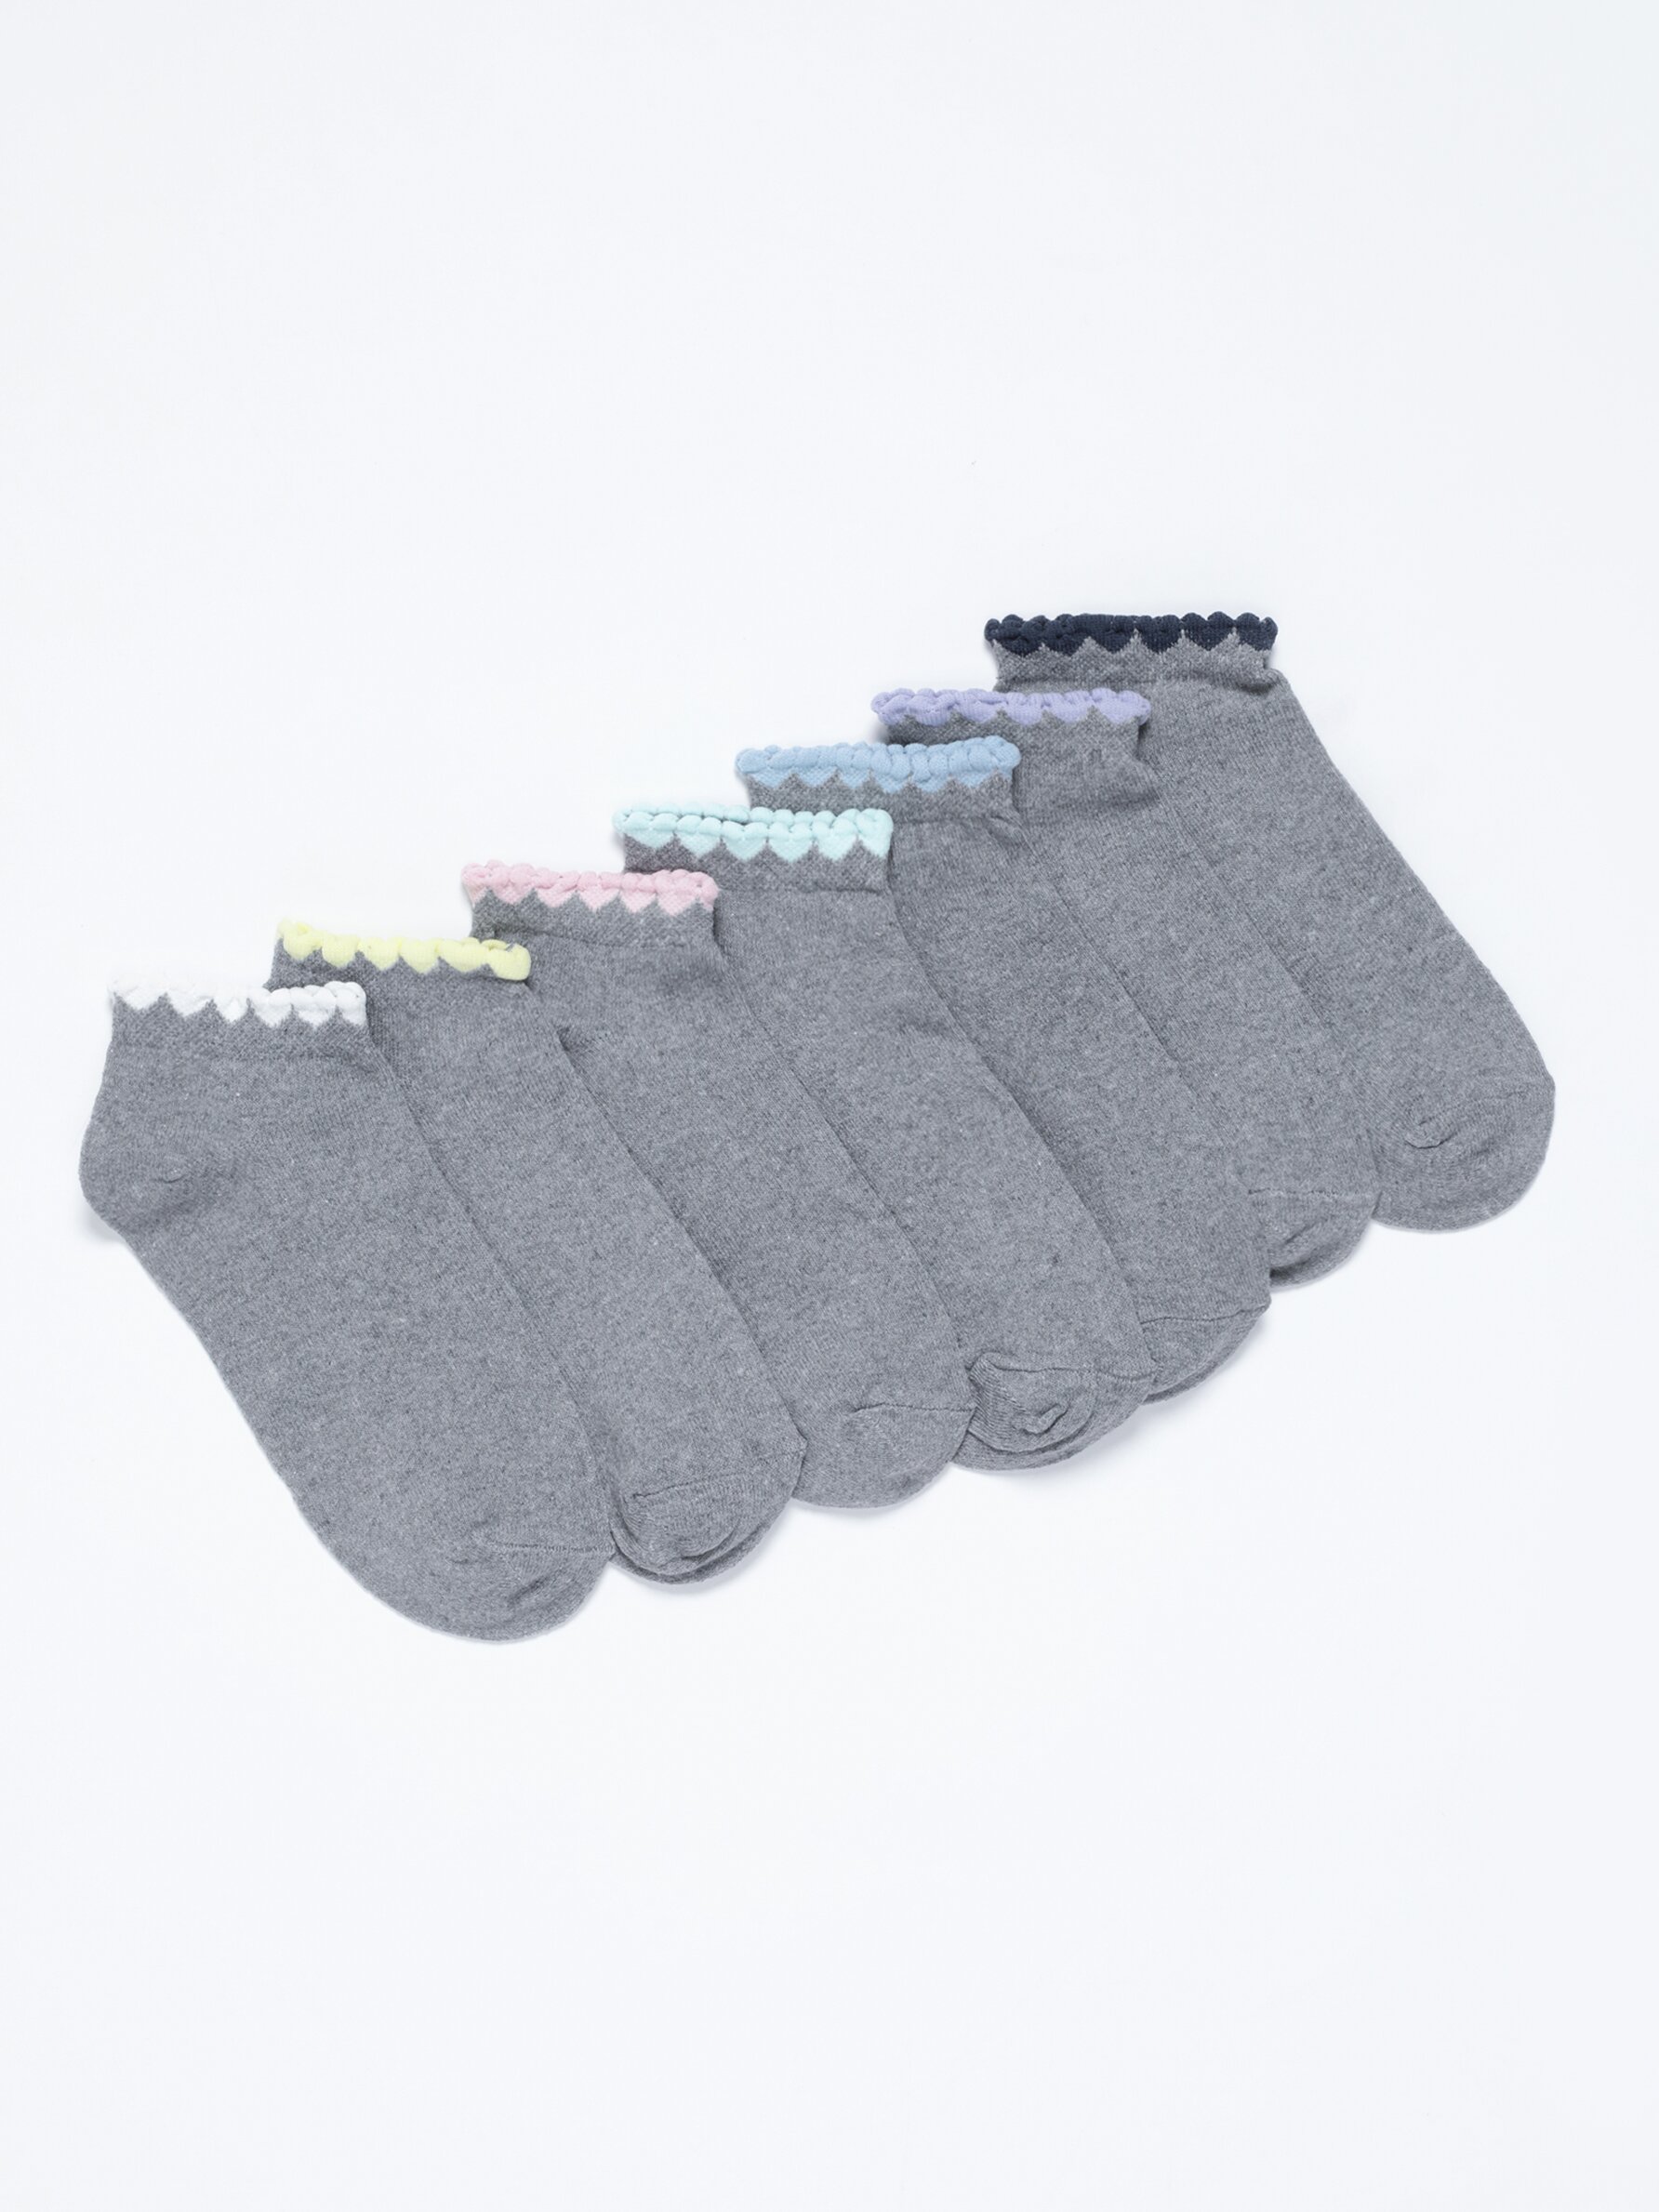 Pack de 7 calcetines cortos - Calcetines - Ropa Interior - ROPA - Mujer 